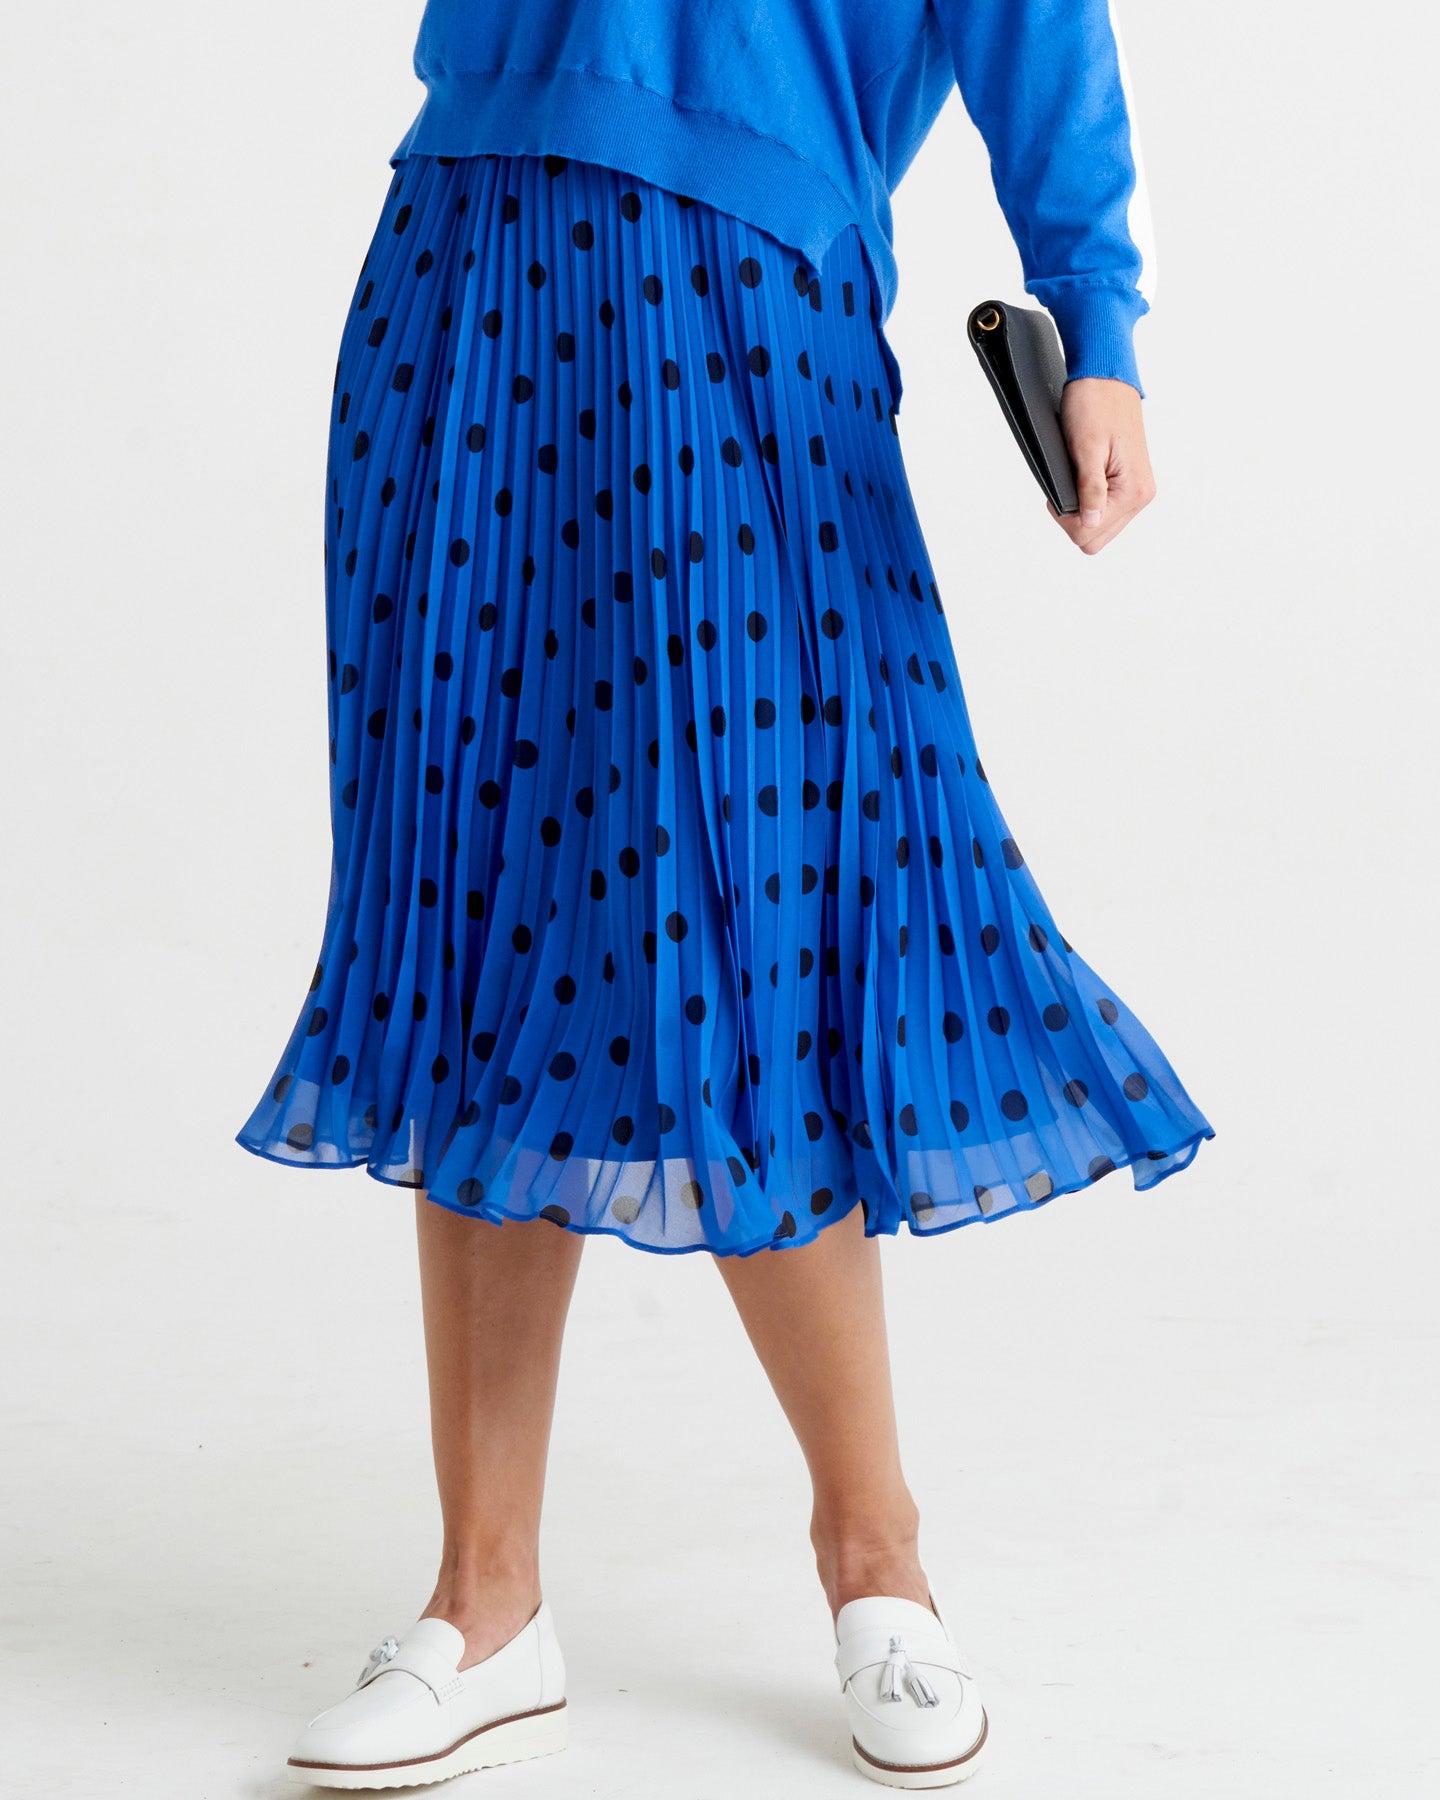 Chanel Pleated Skirt - Bluebell Spots